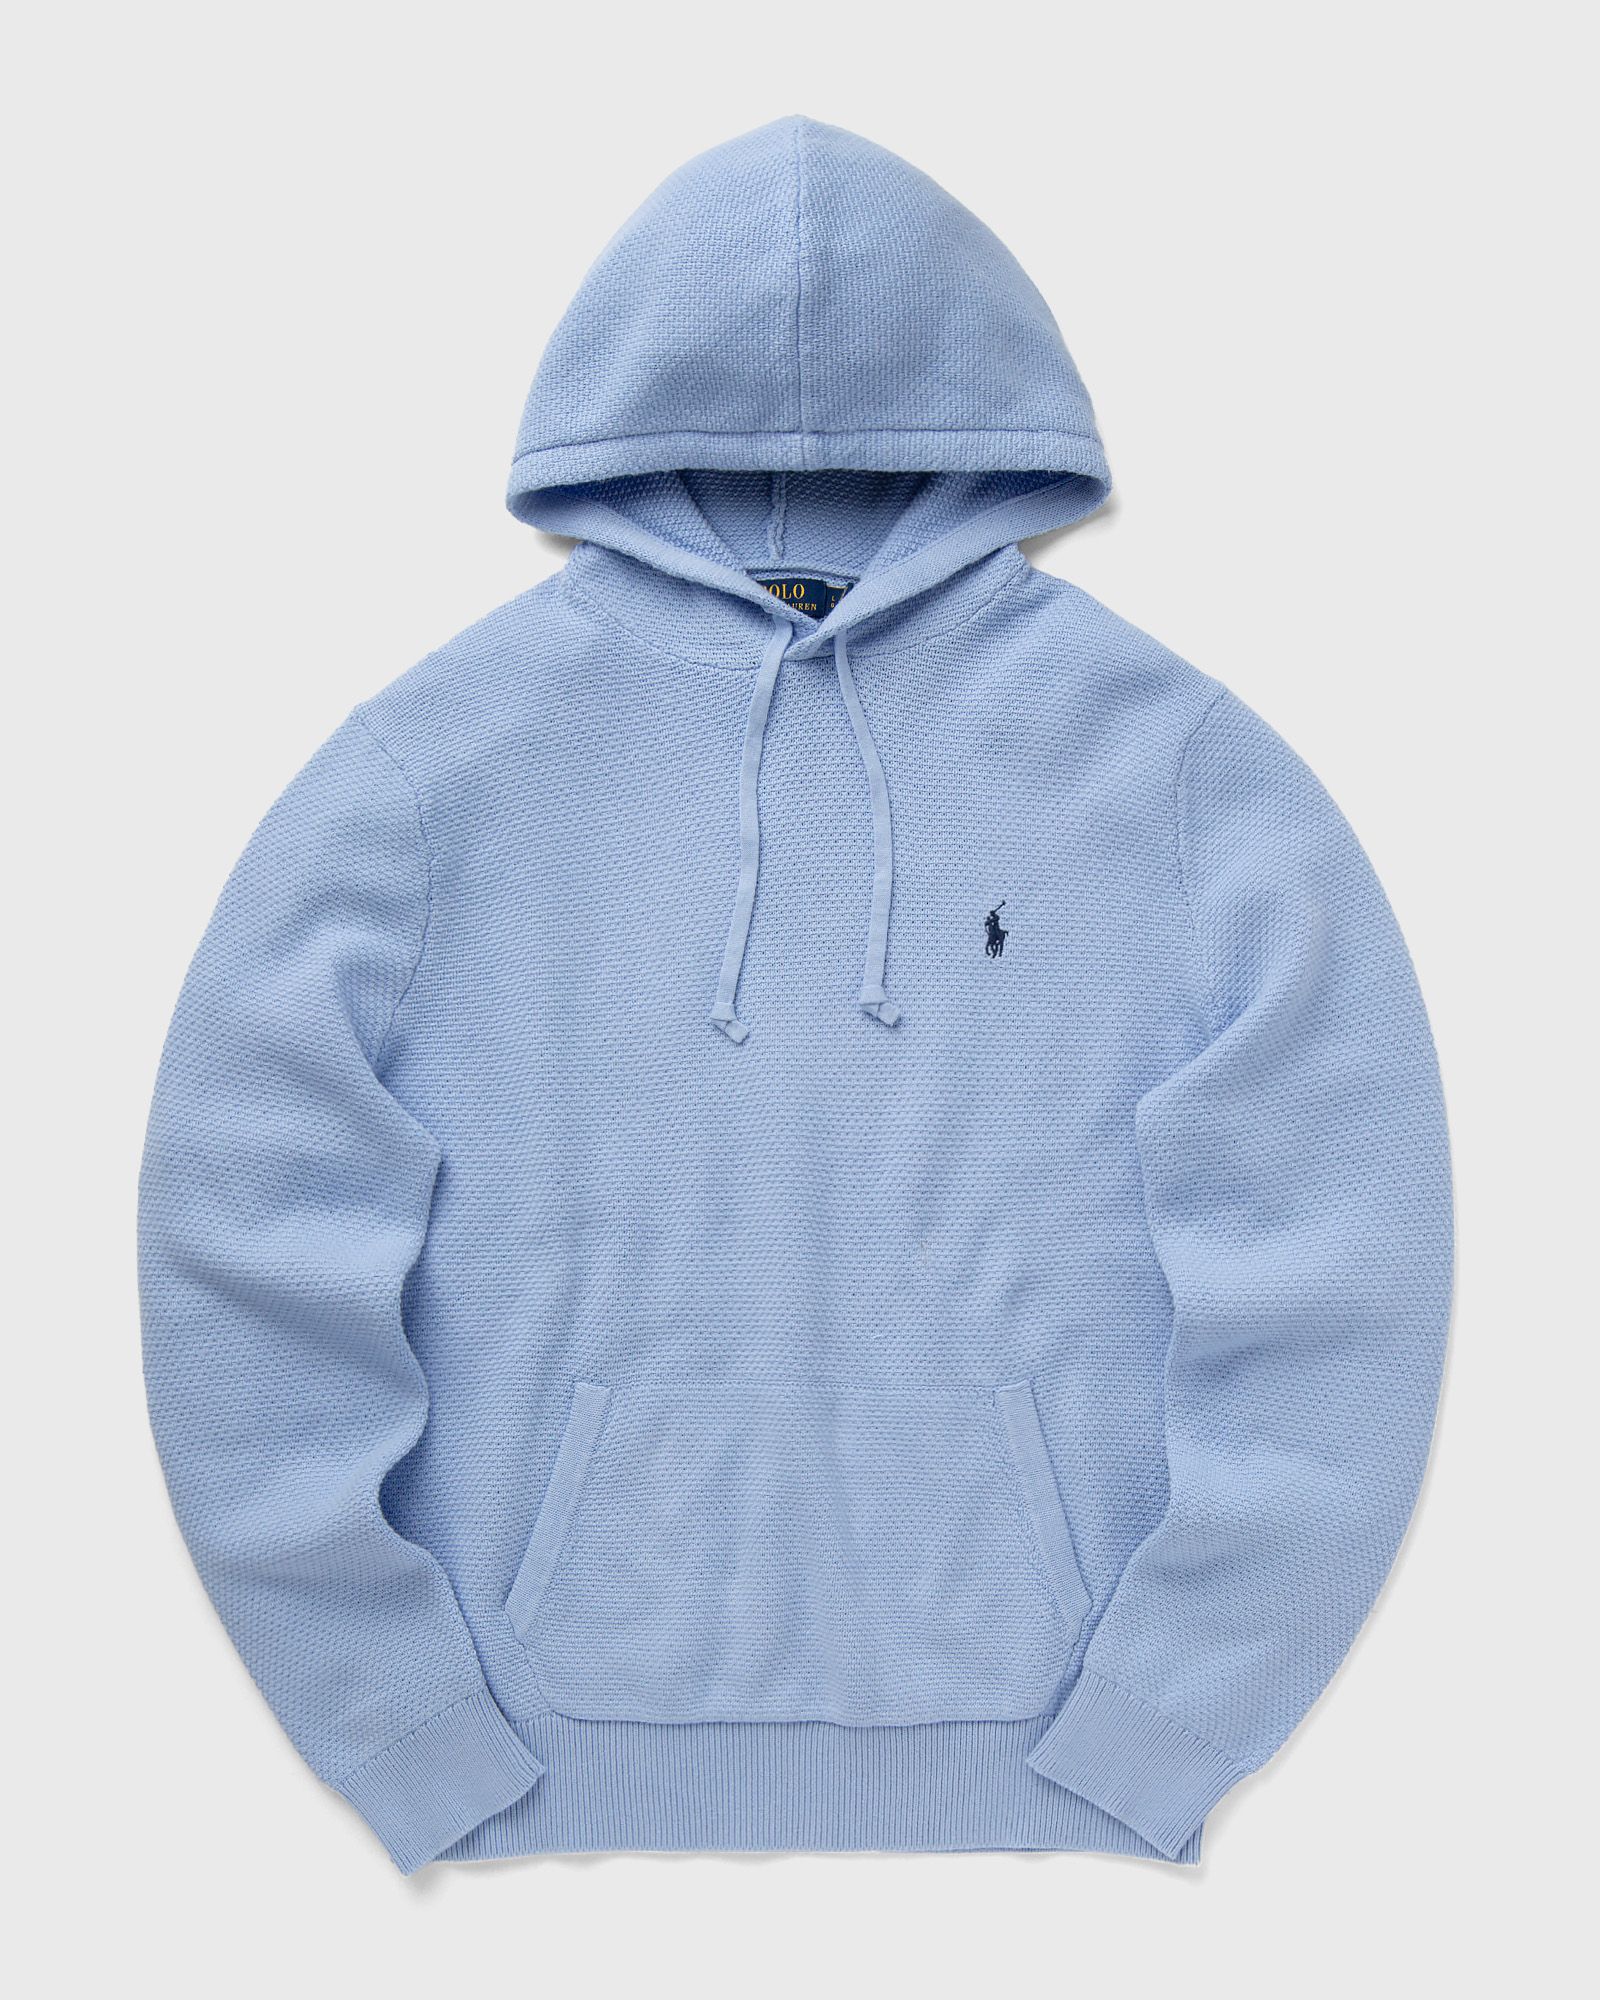 Polo Ralph Lauren - long sleeve-pullover men hoodies blue in größe:xl